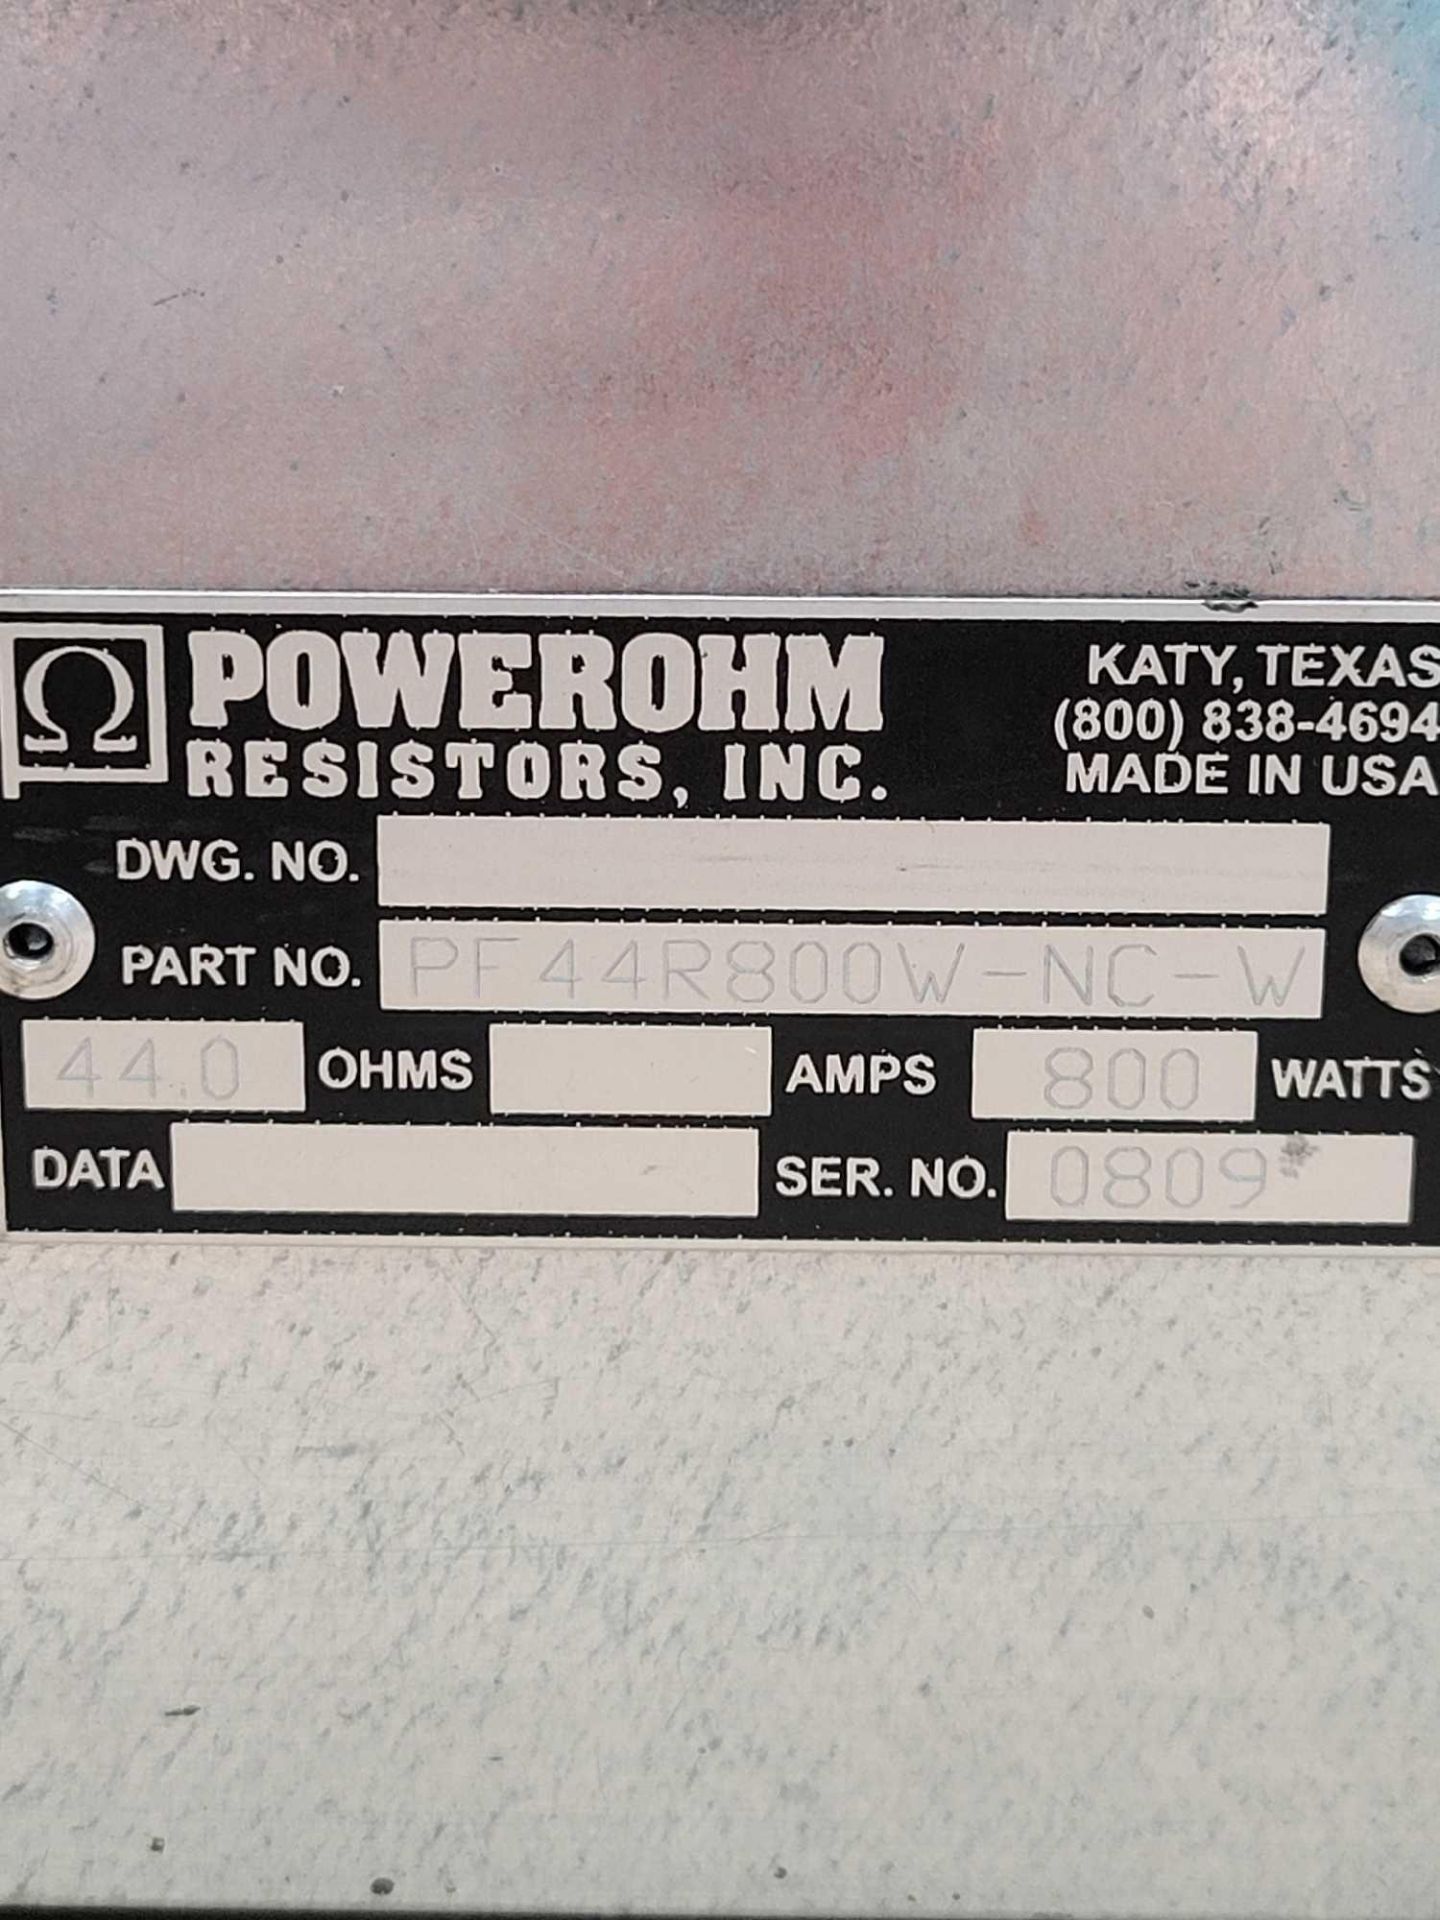 LOT OF 2 POWEROHM PF44R800W-NC-W / Braking Resistor  /  Lot Weight: 16.0 lbs - Image 2 of 5